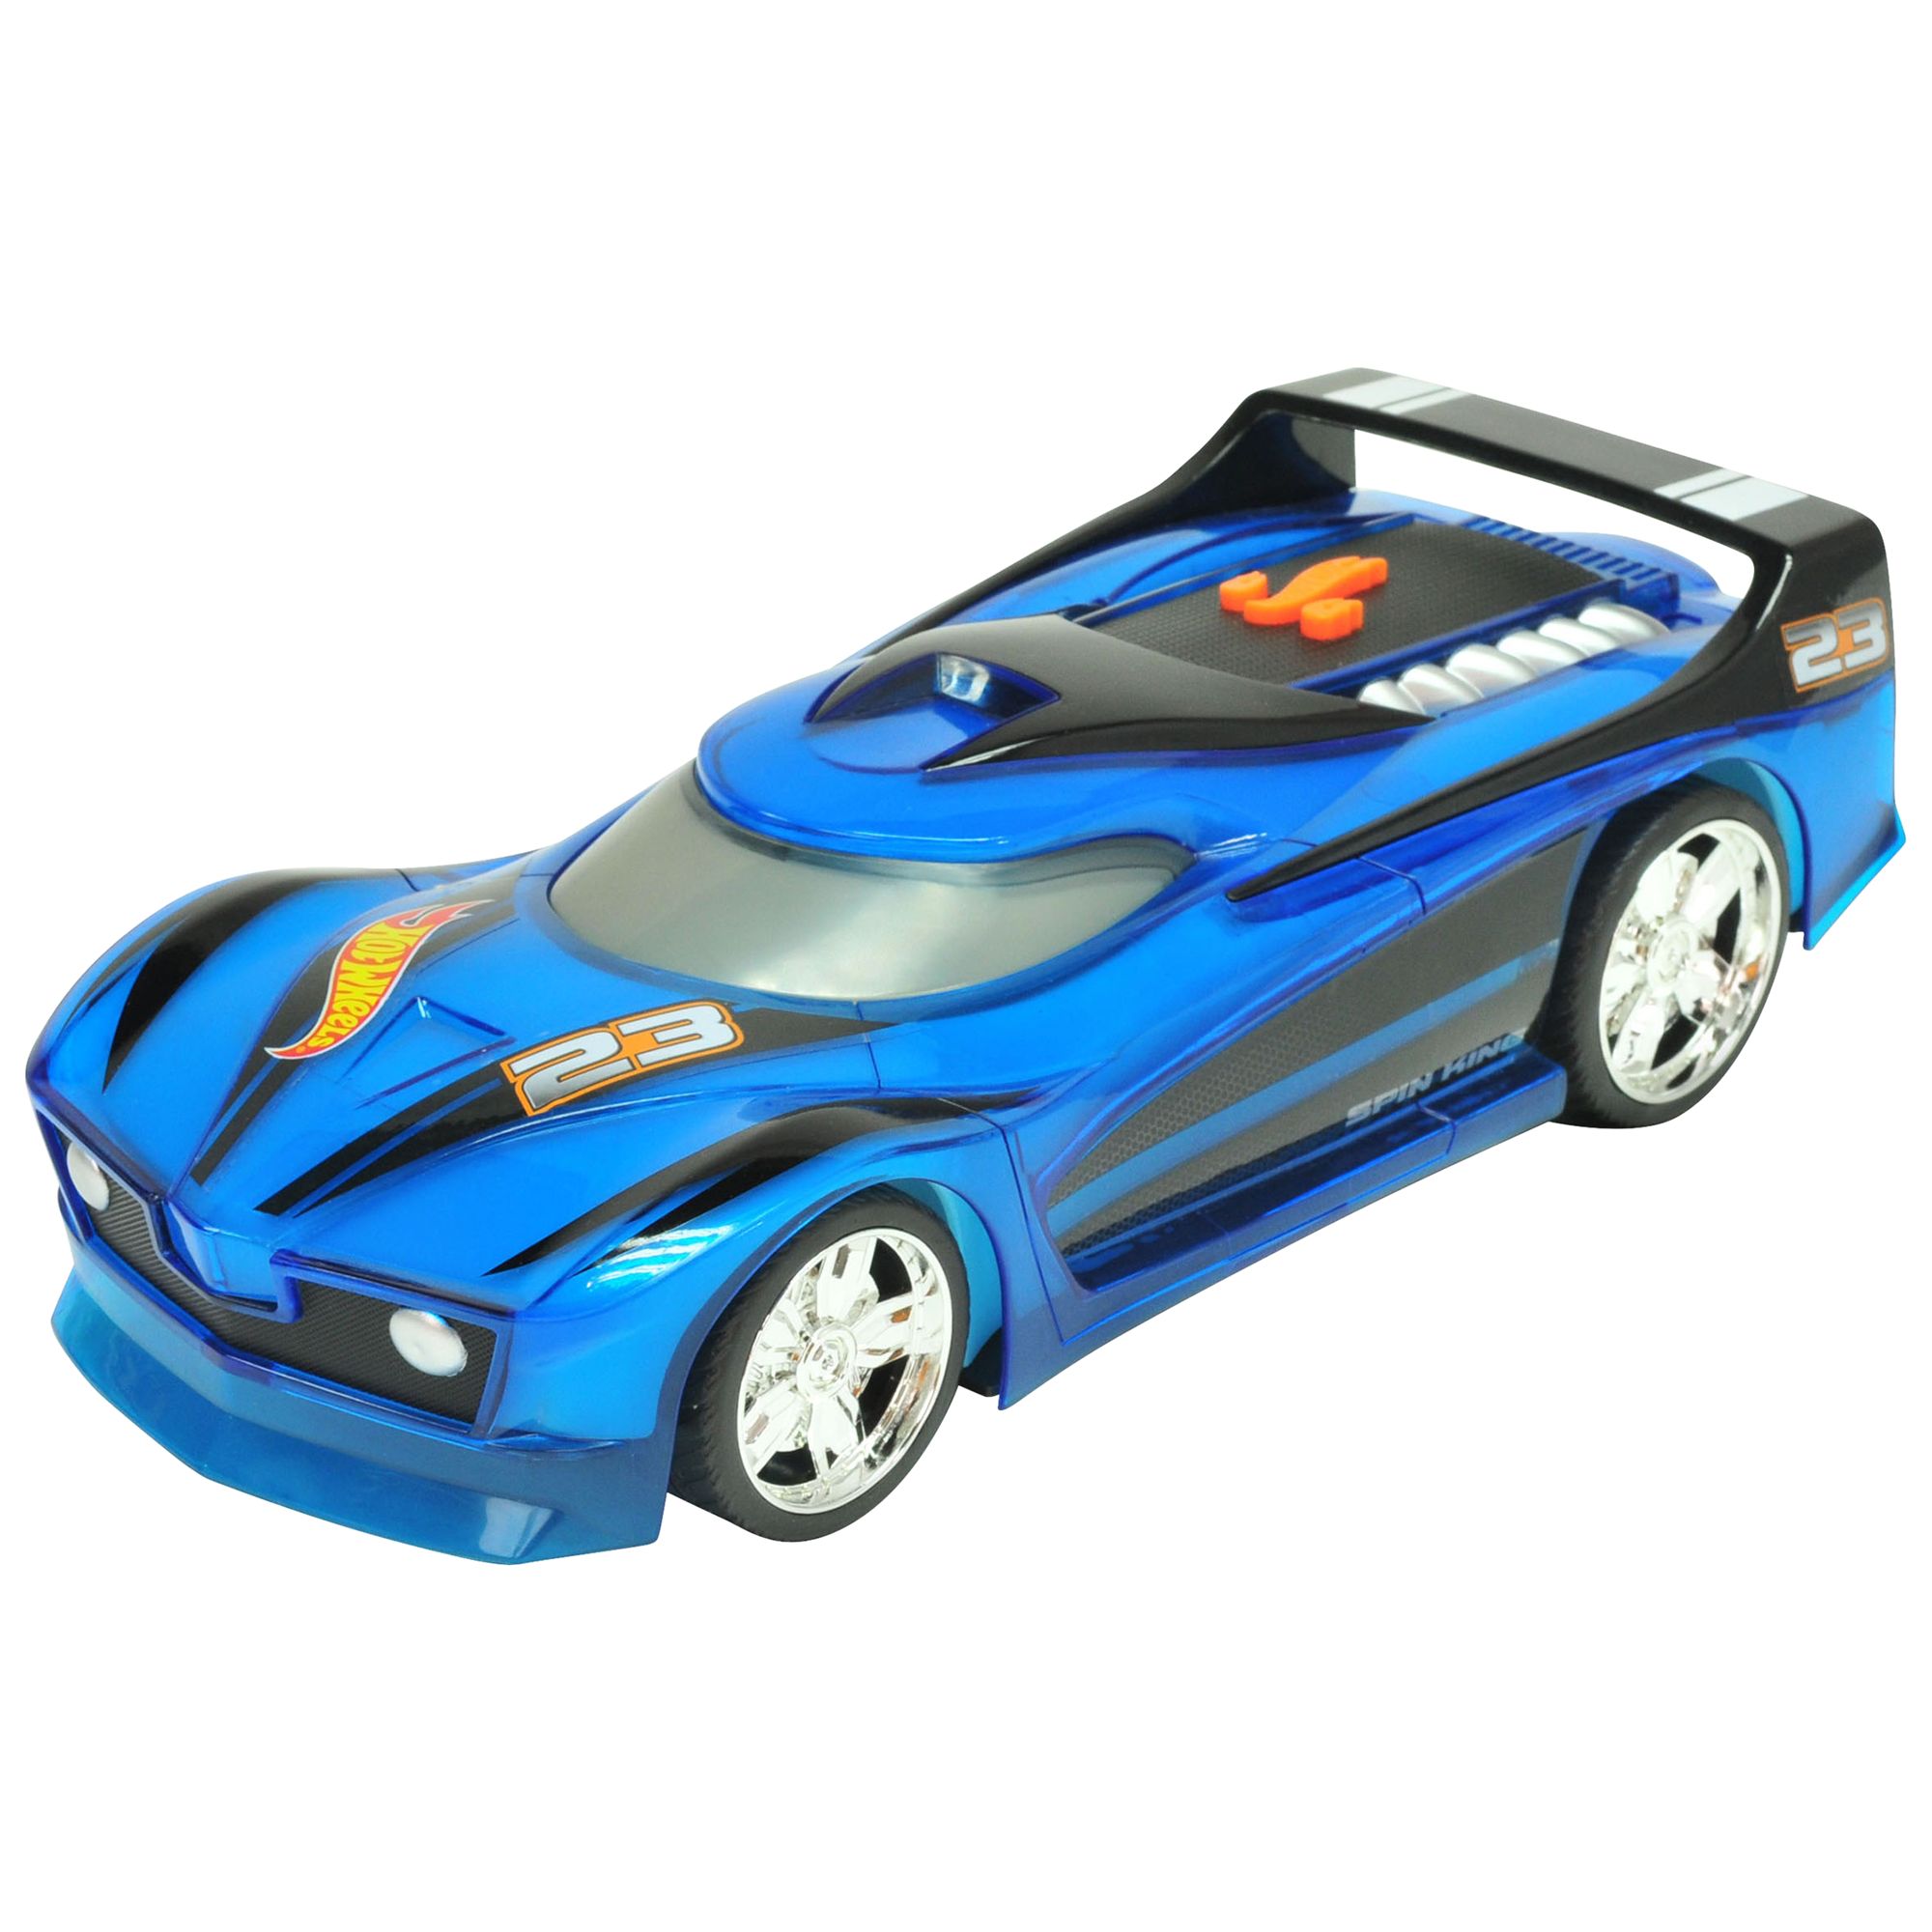 Тачки hot. Машинка hot Wheels Hyper Racer. Хот Вилс голубая машинка. Машина "хот Вилс" - Hyper Racer (свет, звук, движение, меняет цвет), синяя. Хот Вилс синяя.